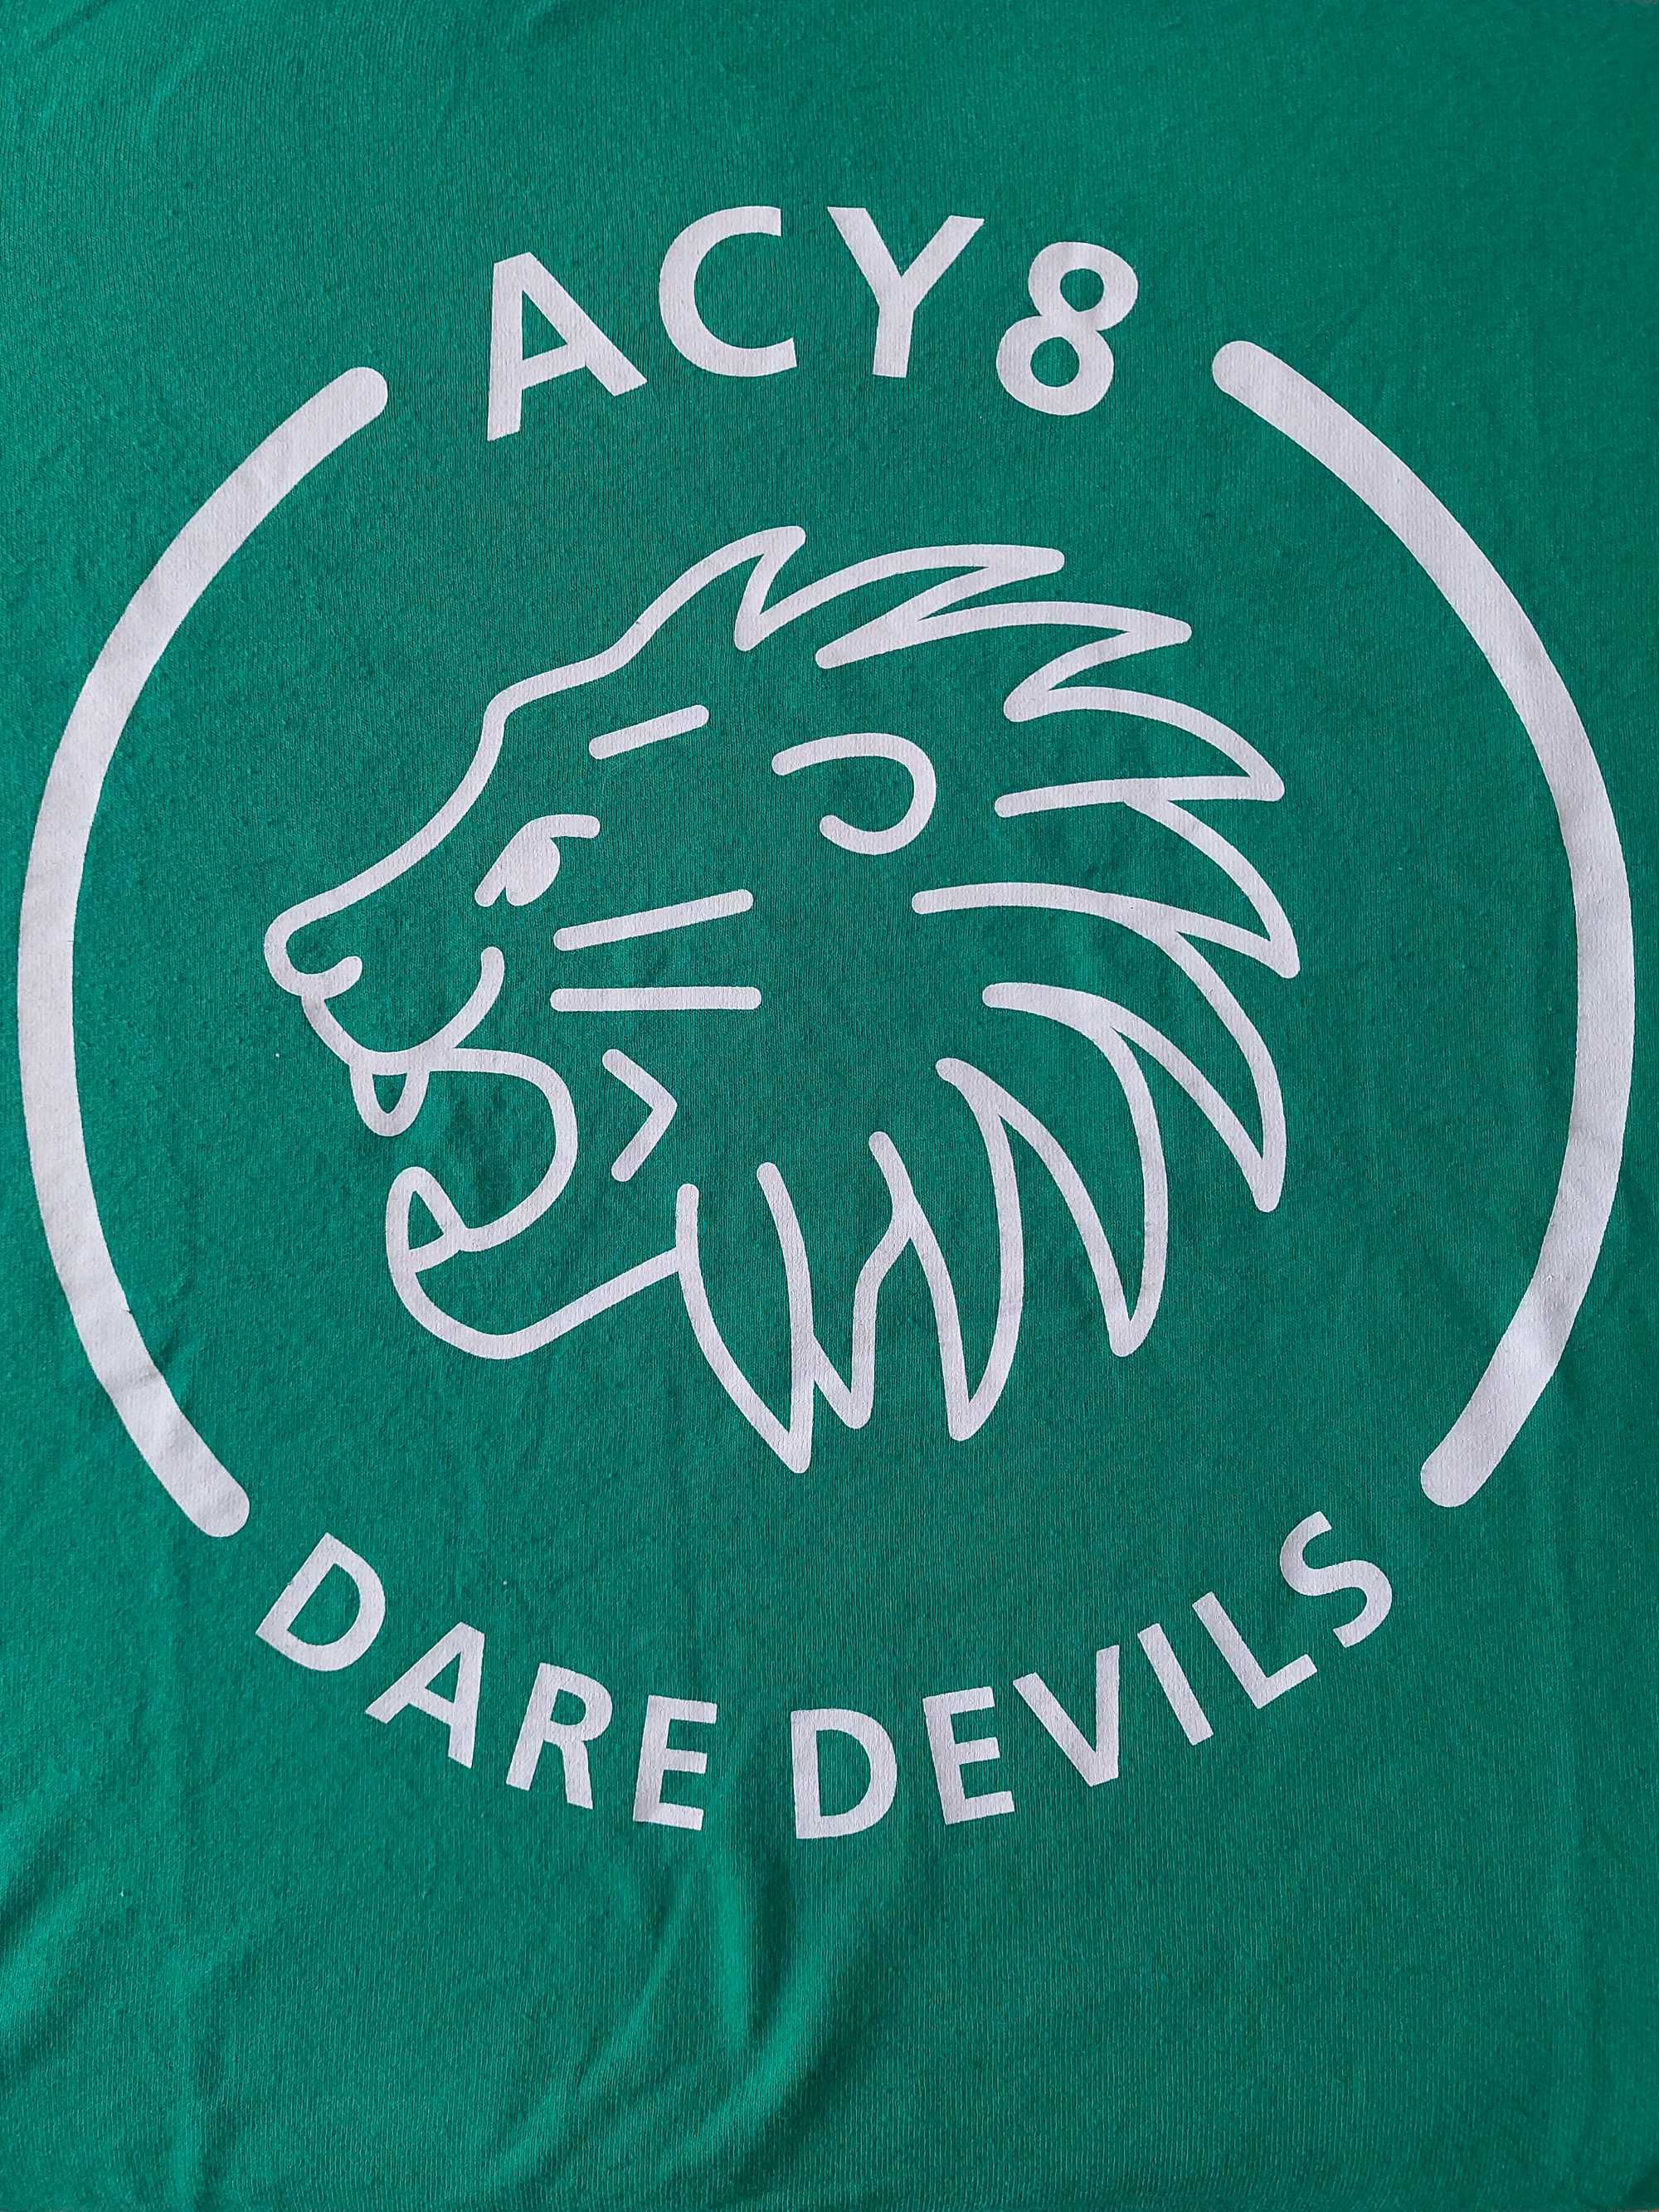 Koszulka XL/L Zielona ACY8 Dare Devils Damska Męska Duża Oversized